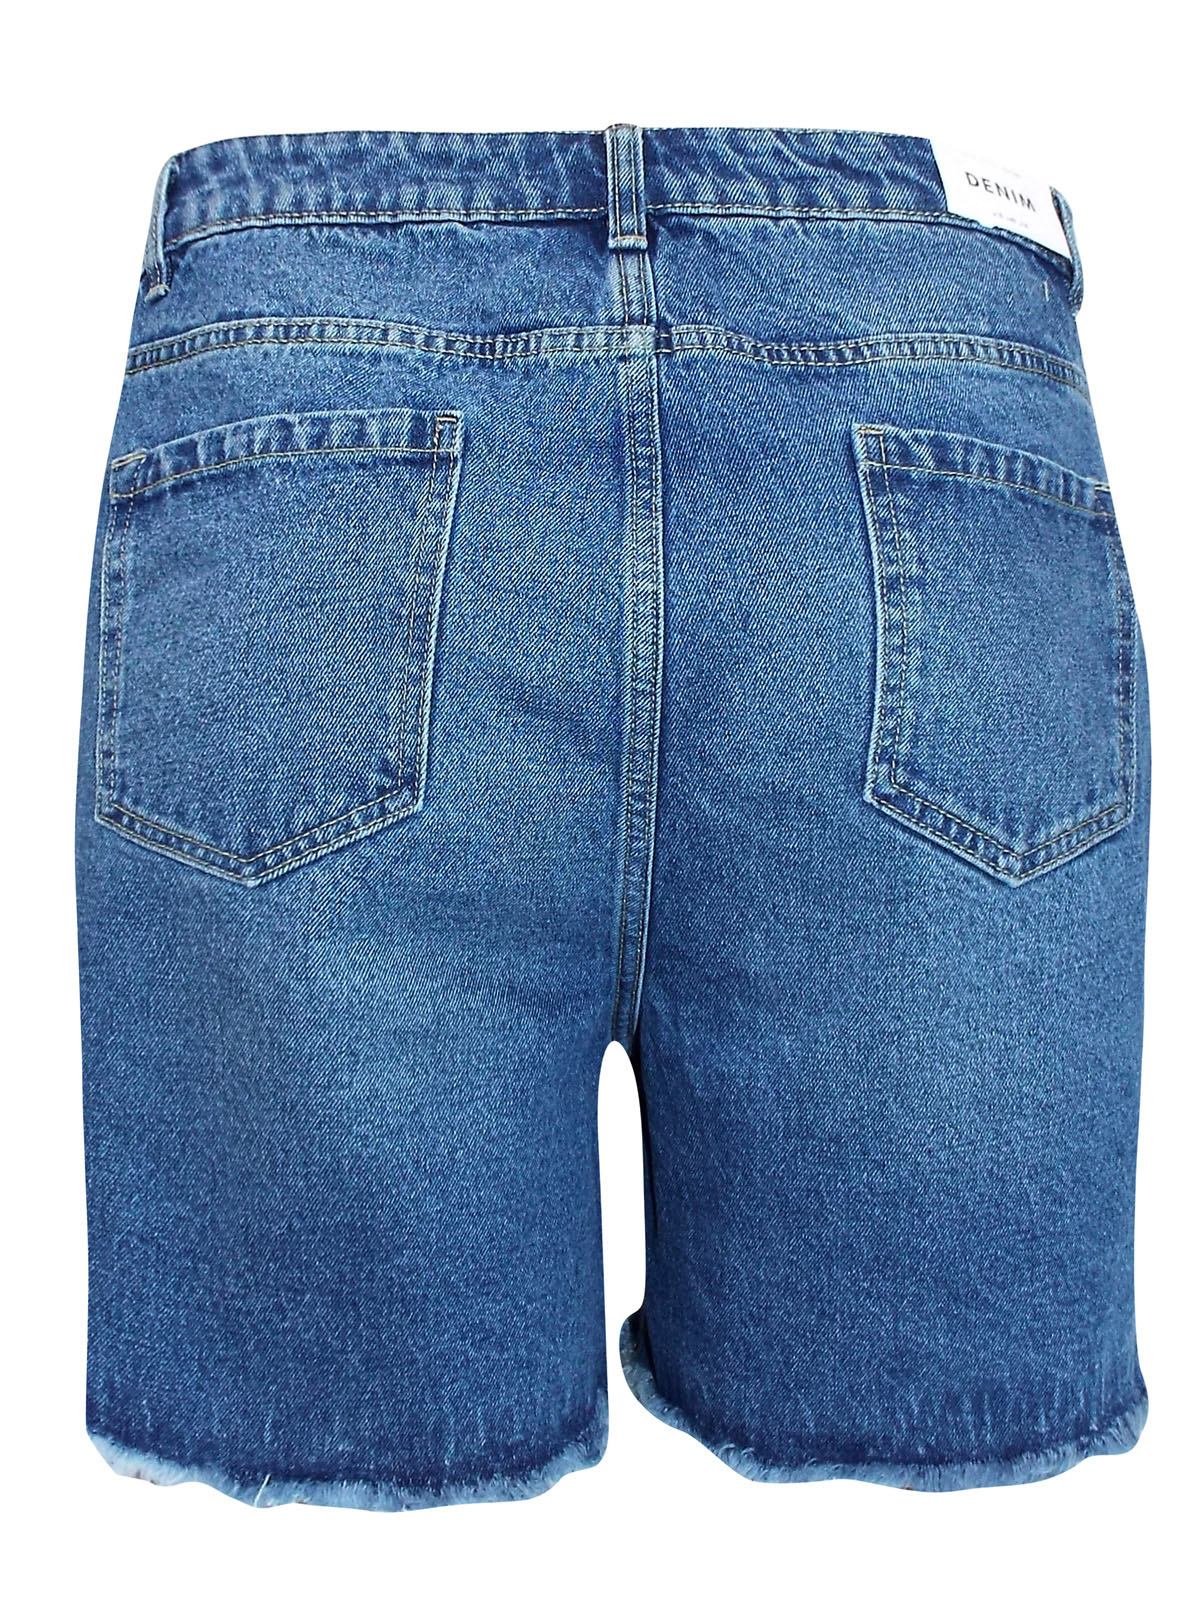 N3w L00k Curve Blue Cotton Boyfriend Denim Shorts Plus Size 18 To 26